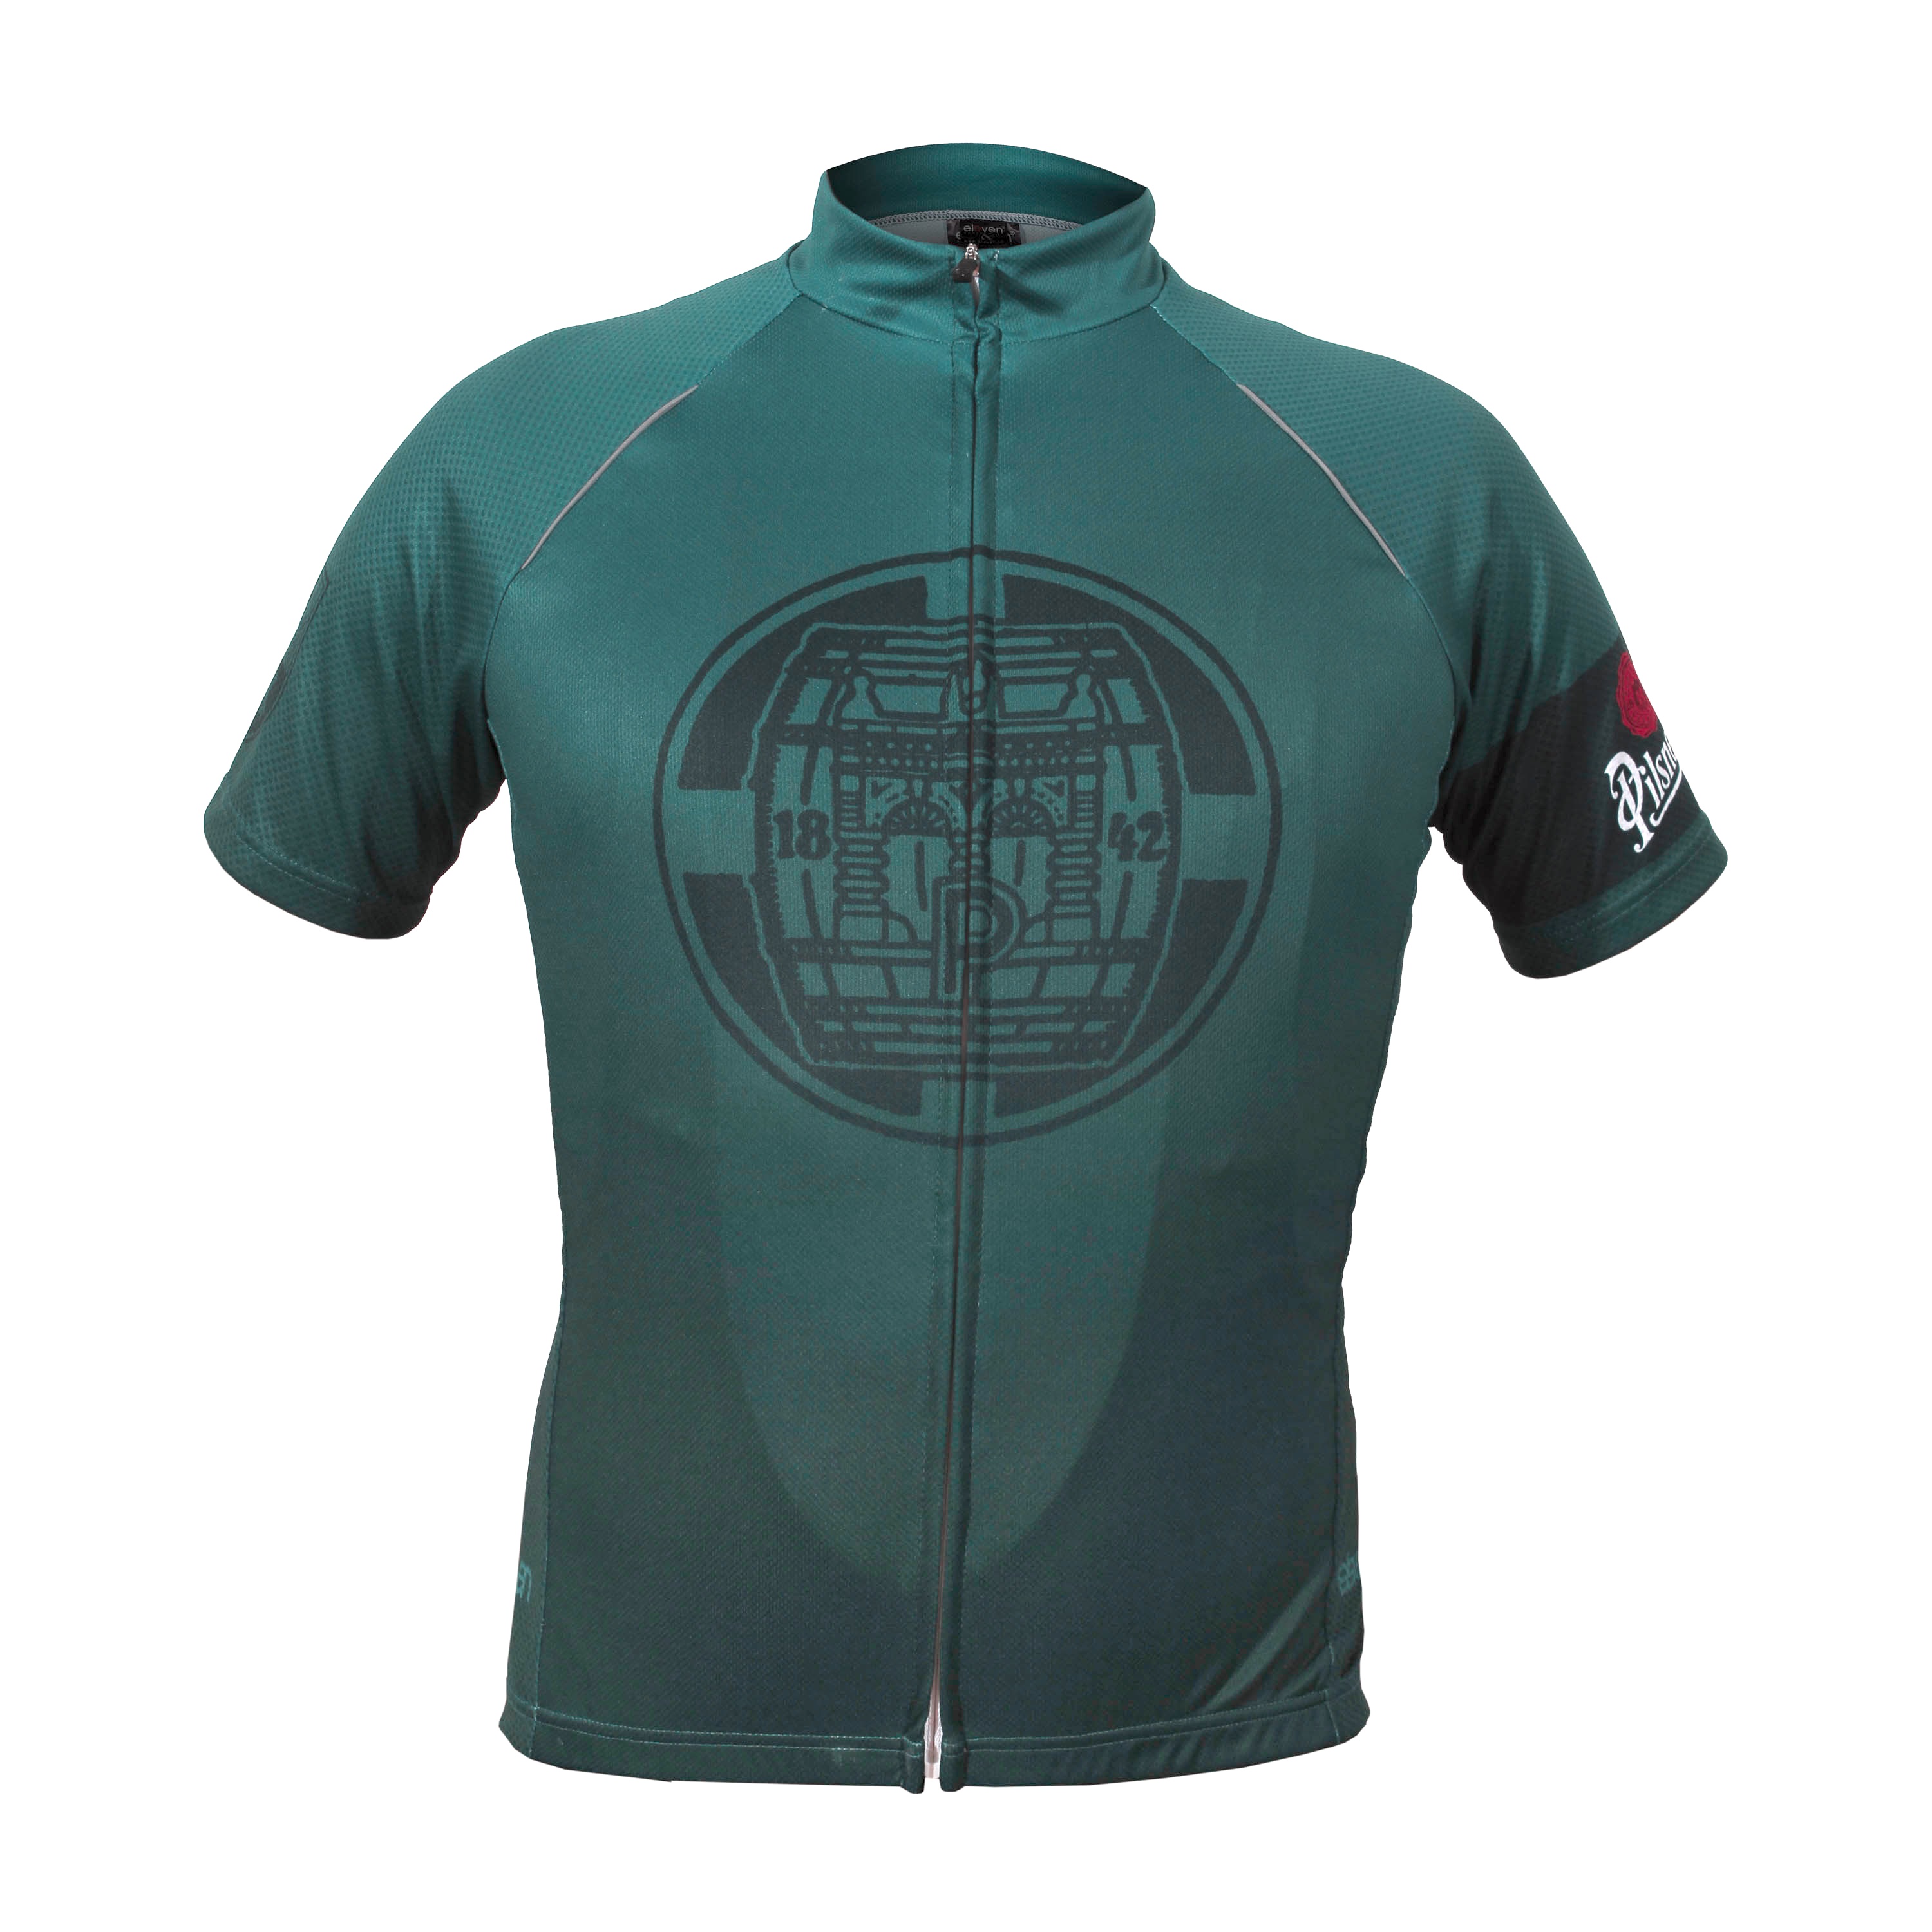 Pánský cyklistický dres Pilsner Urquell tmavě zelený